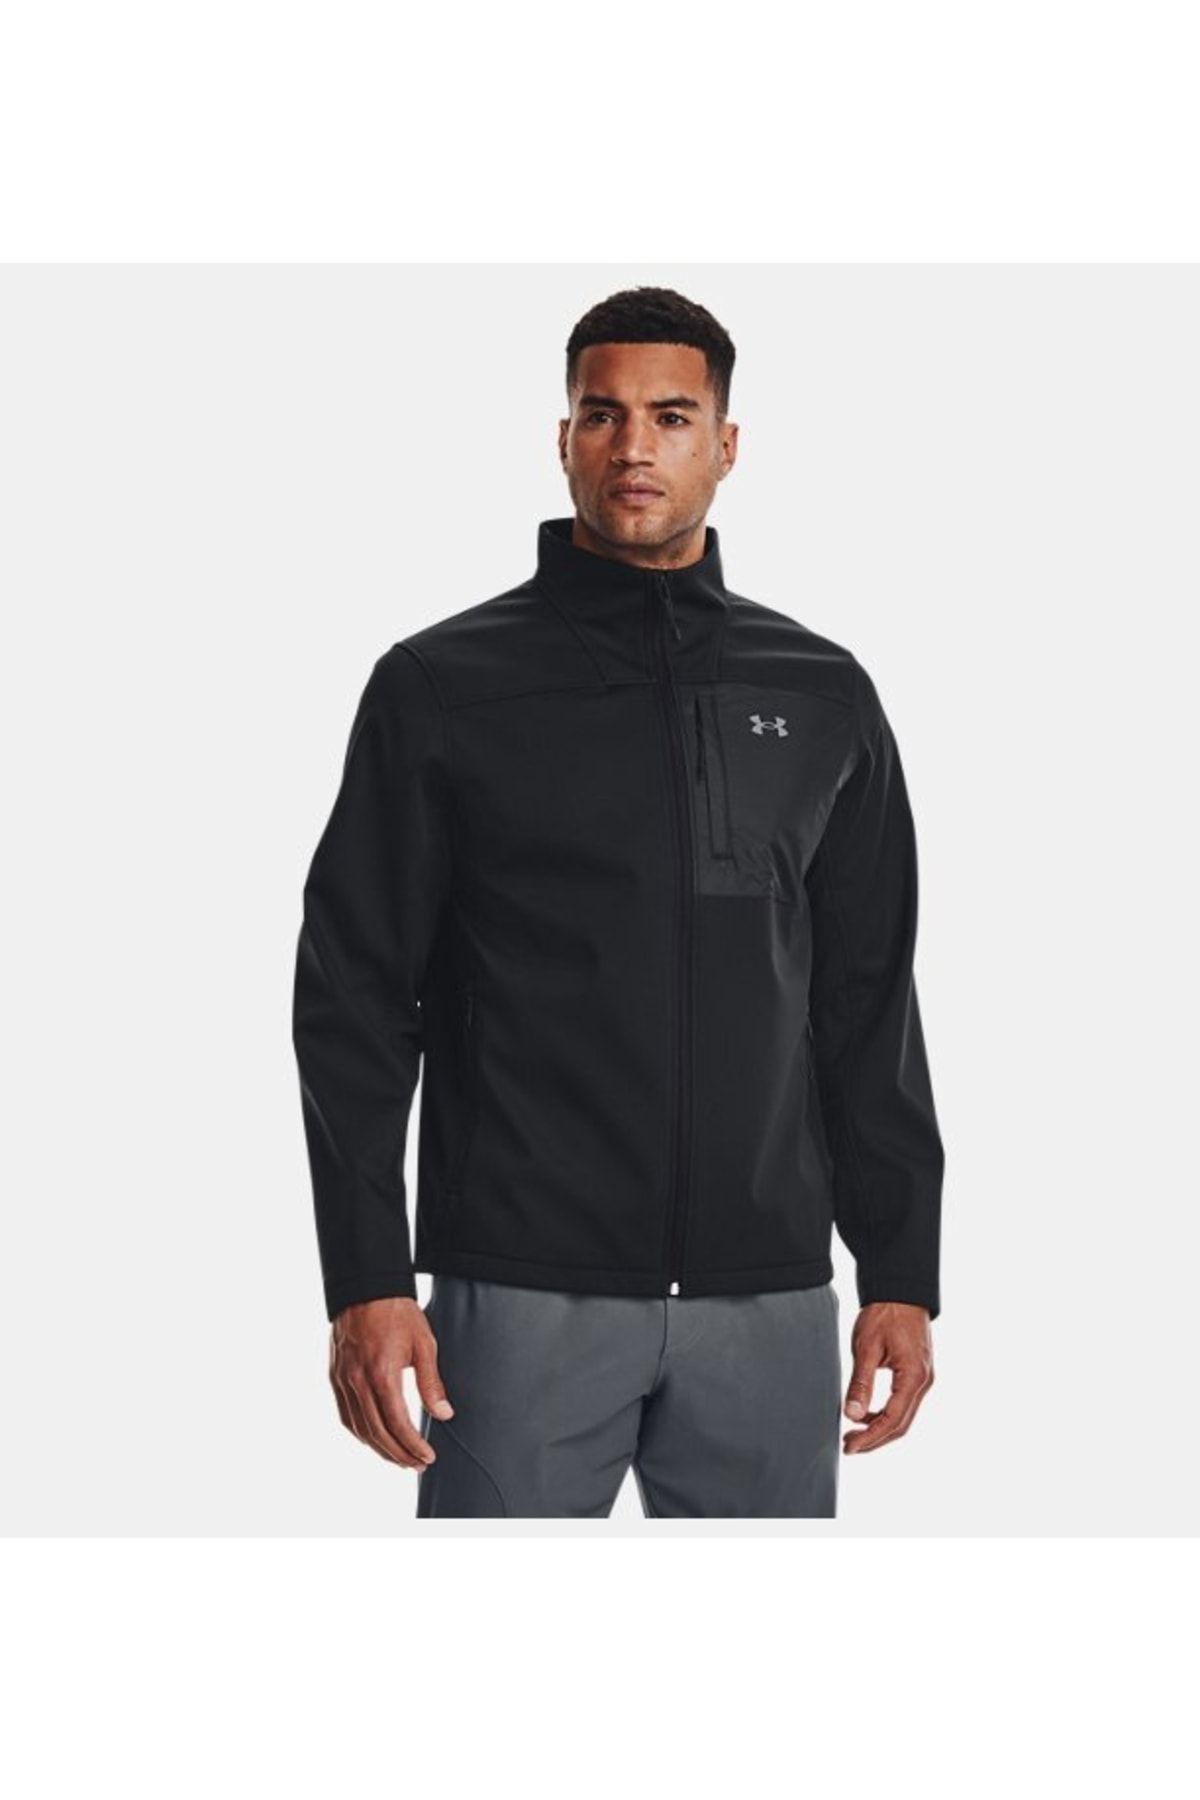 Men's Under Armour Storm ColdGear® Infrared Shield 2.0 Jacket